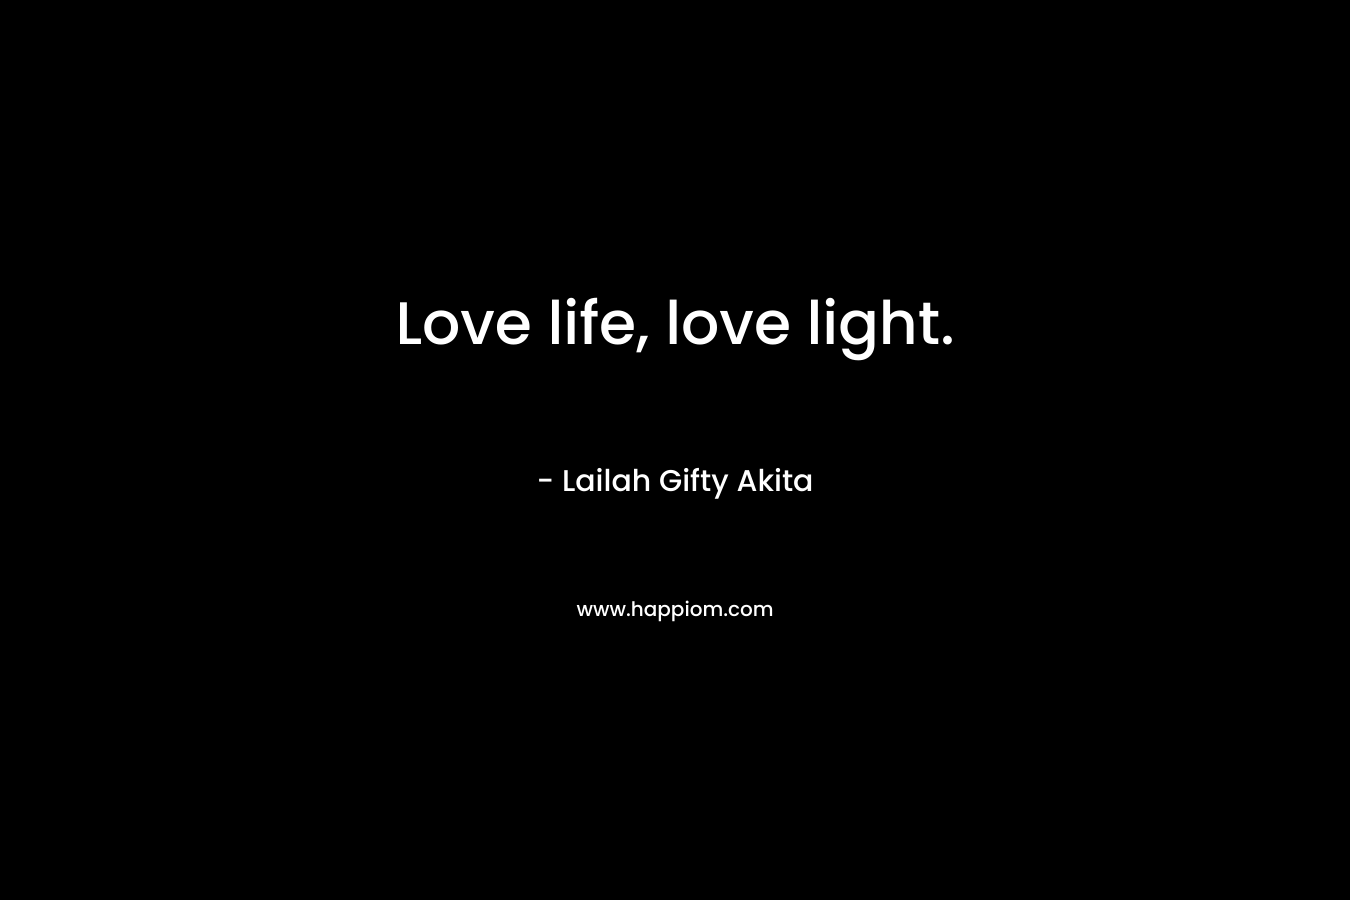 Love life, love light.